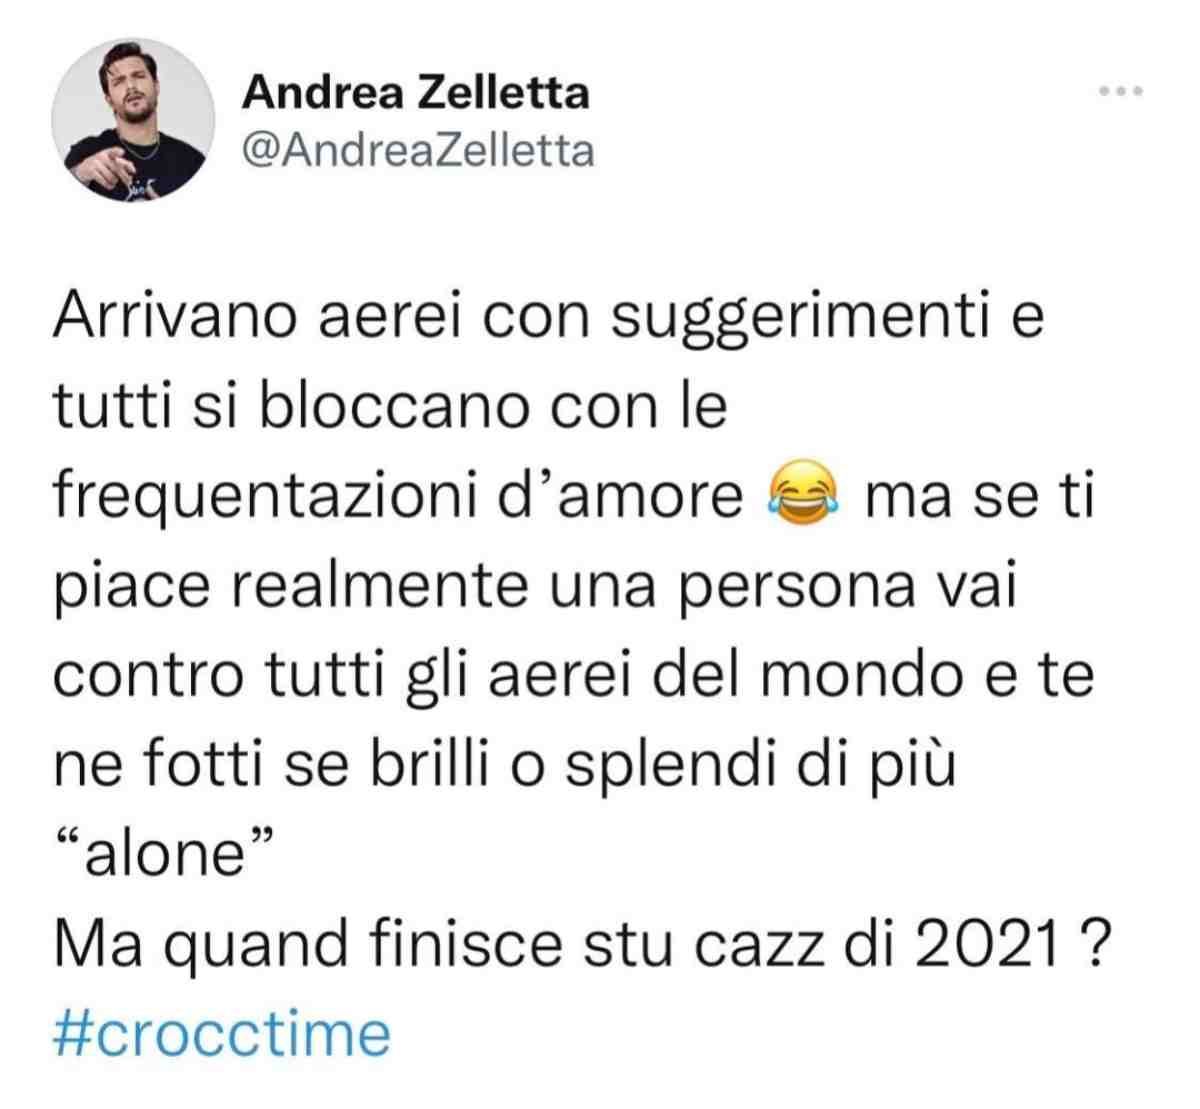 Il tweet di Andrea Zelletta